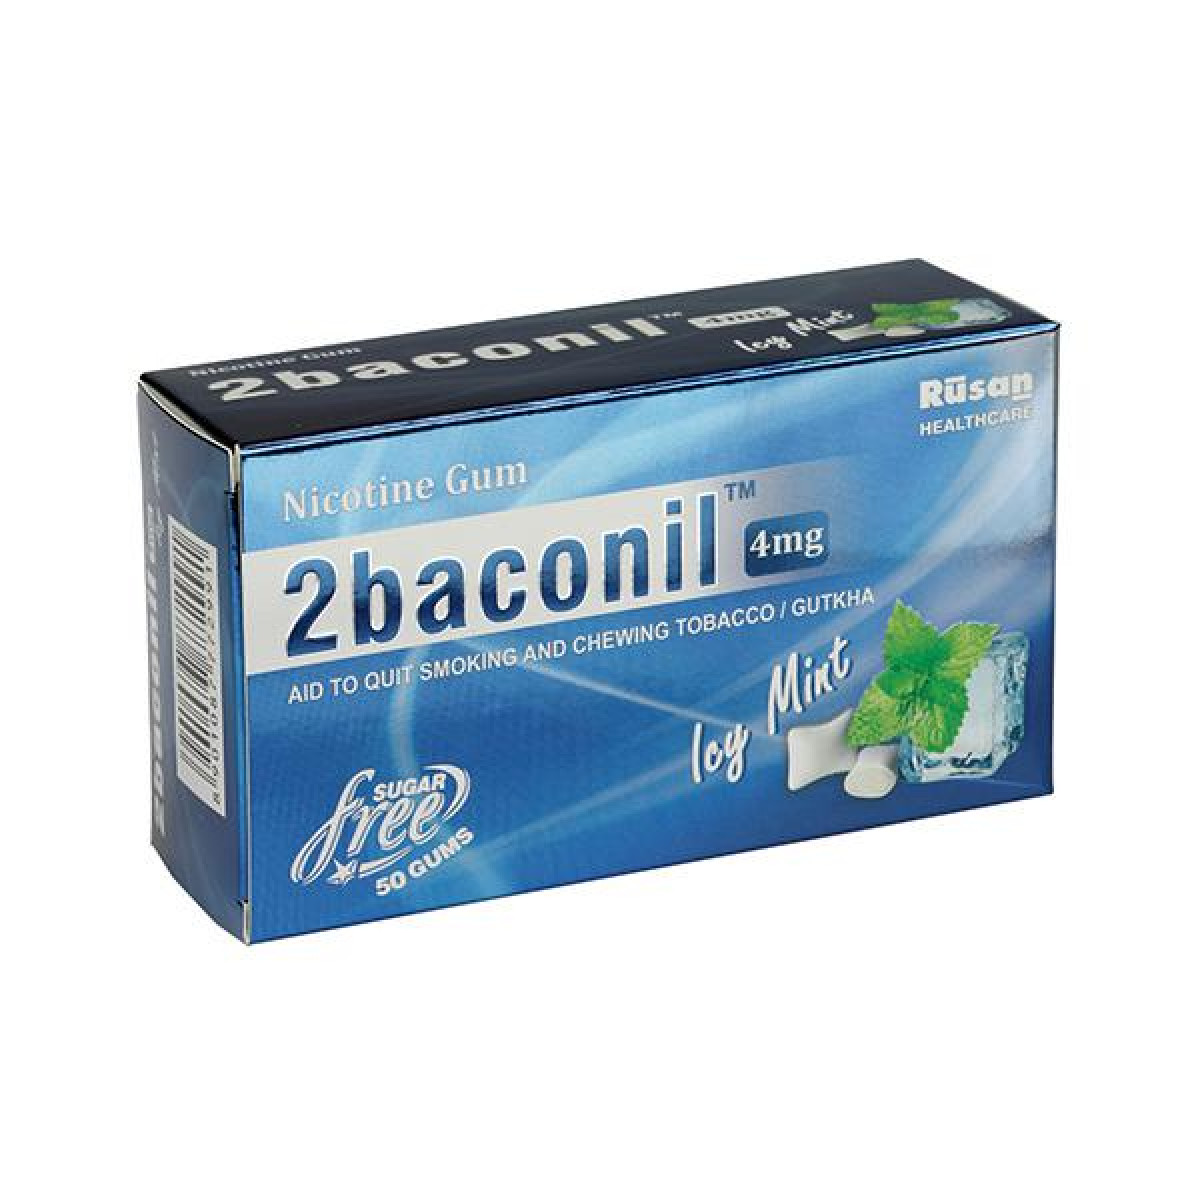 2baconil 4mg Nicotine Gum Ice Mint Sugar Free